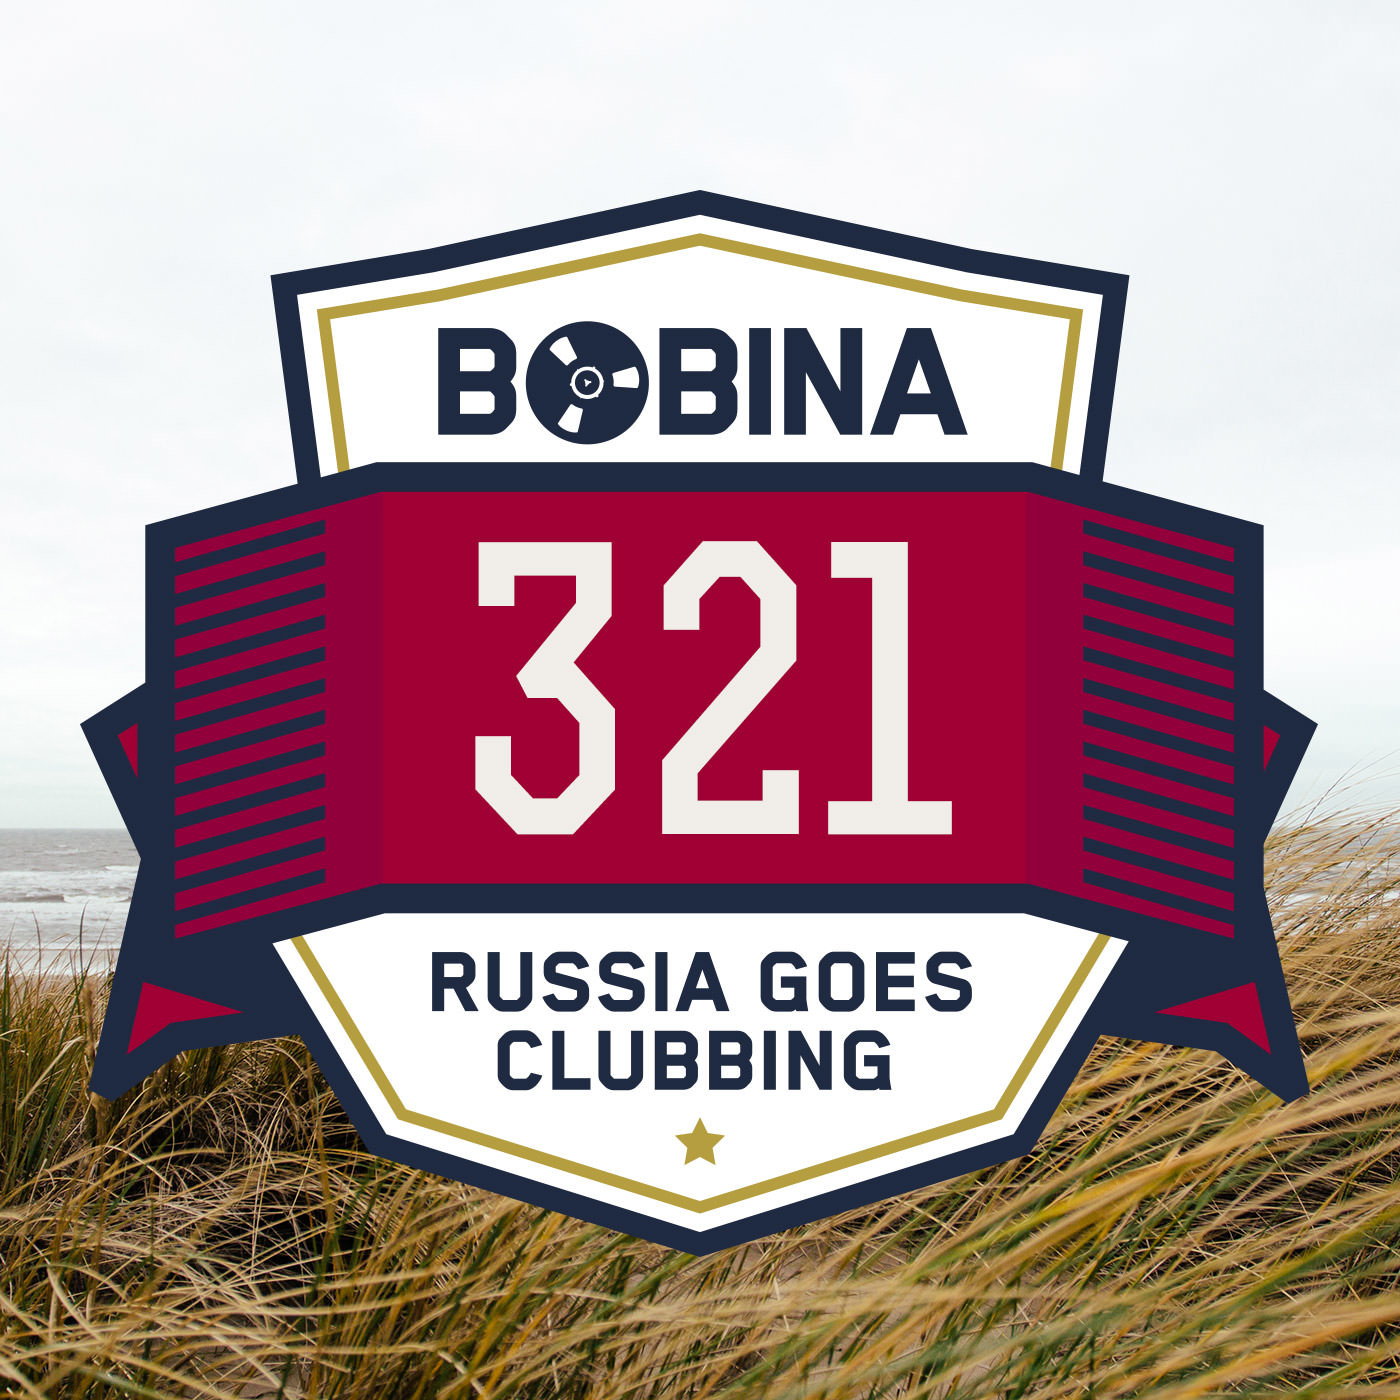 Nr. 321 Russia Goes Clubbing